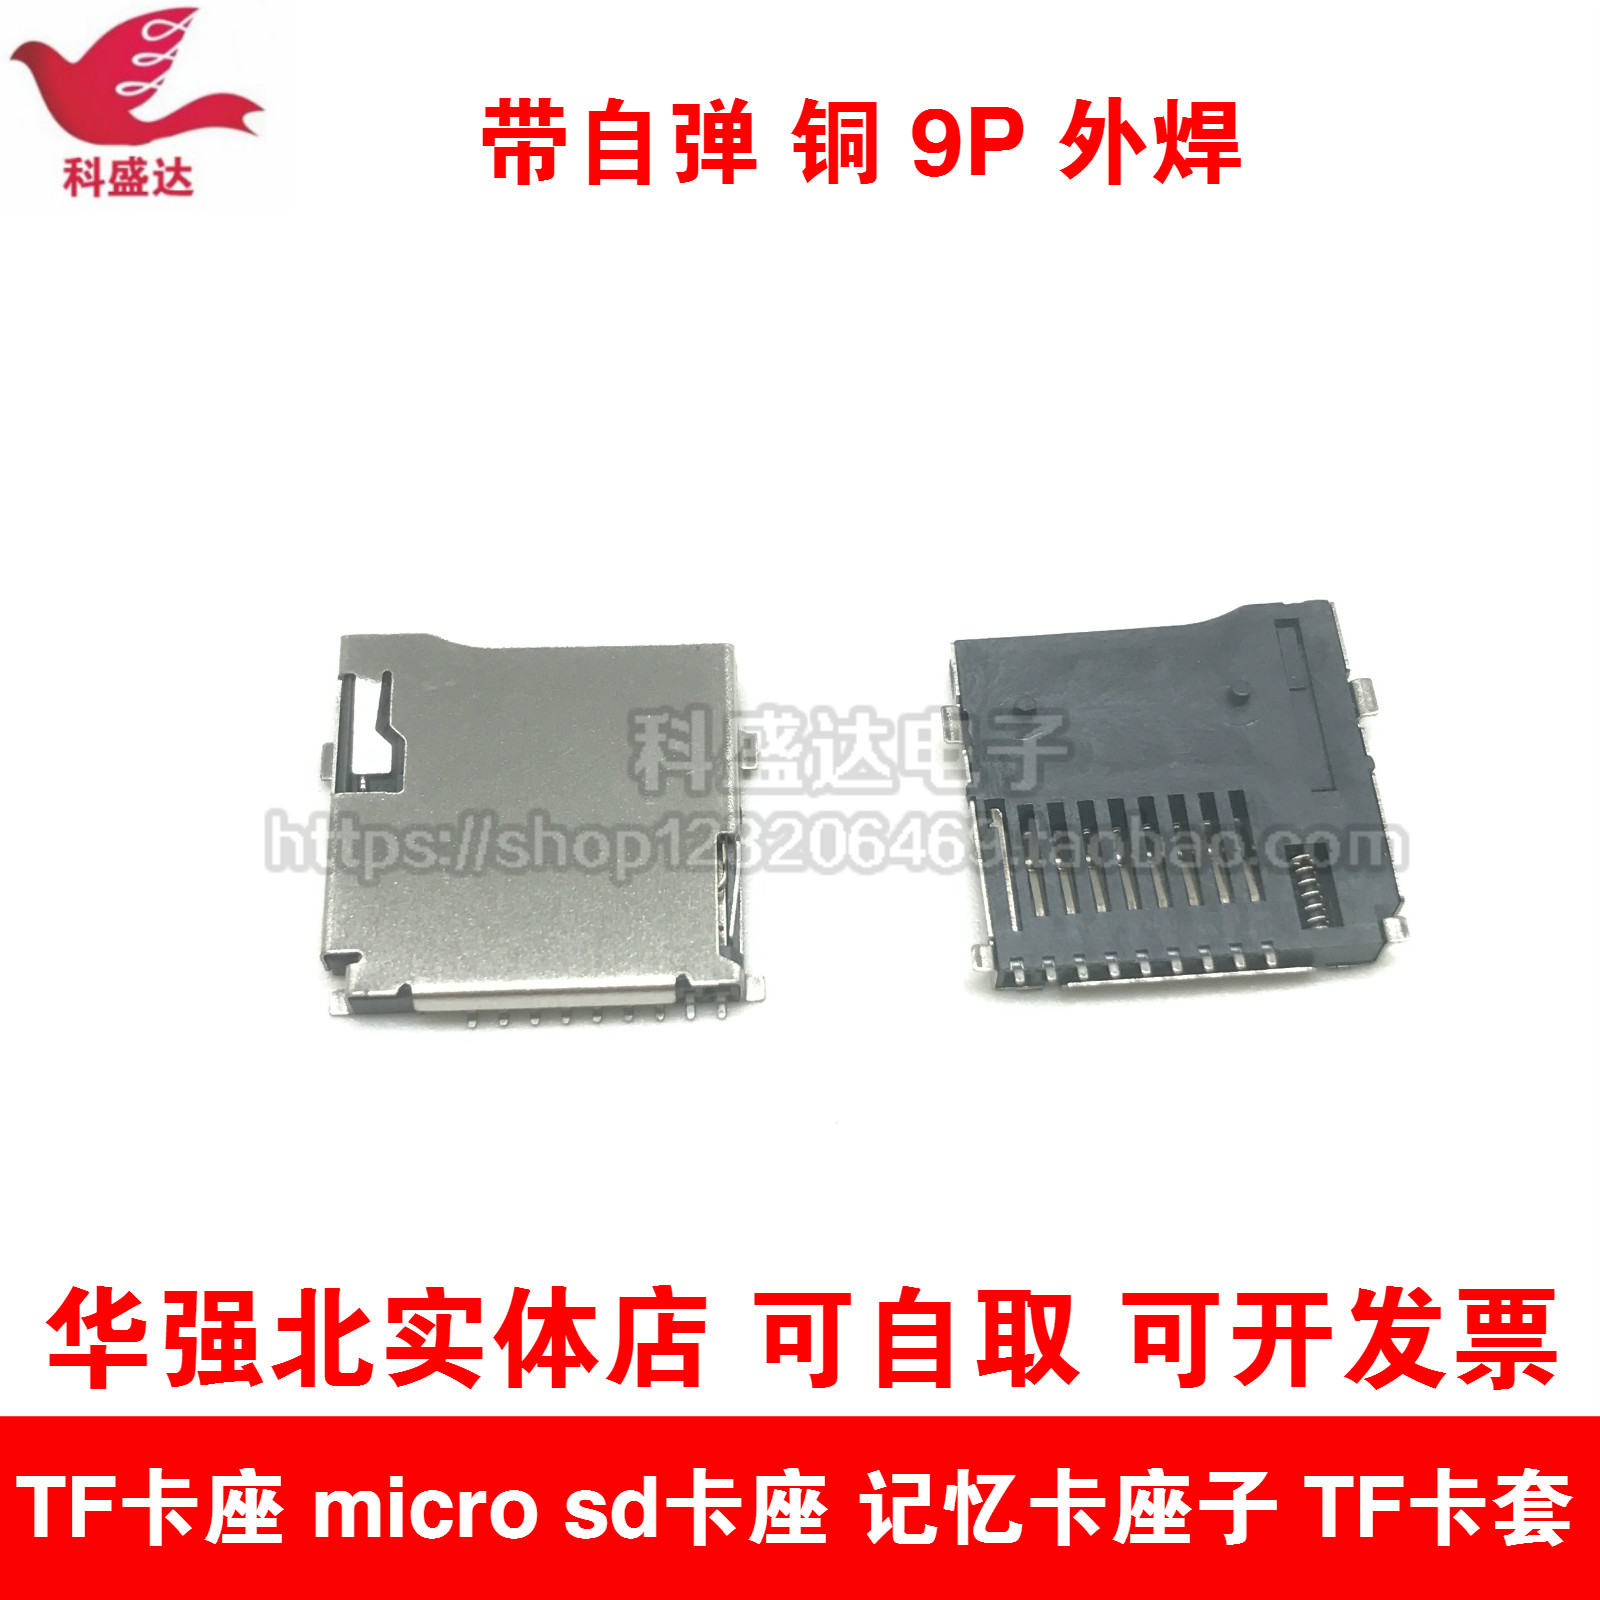 TF card holder micro sd card holder memory card holder TF card holder with self-bullet copper 9P external welding bullet